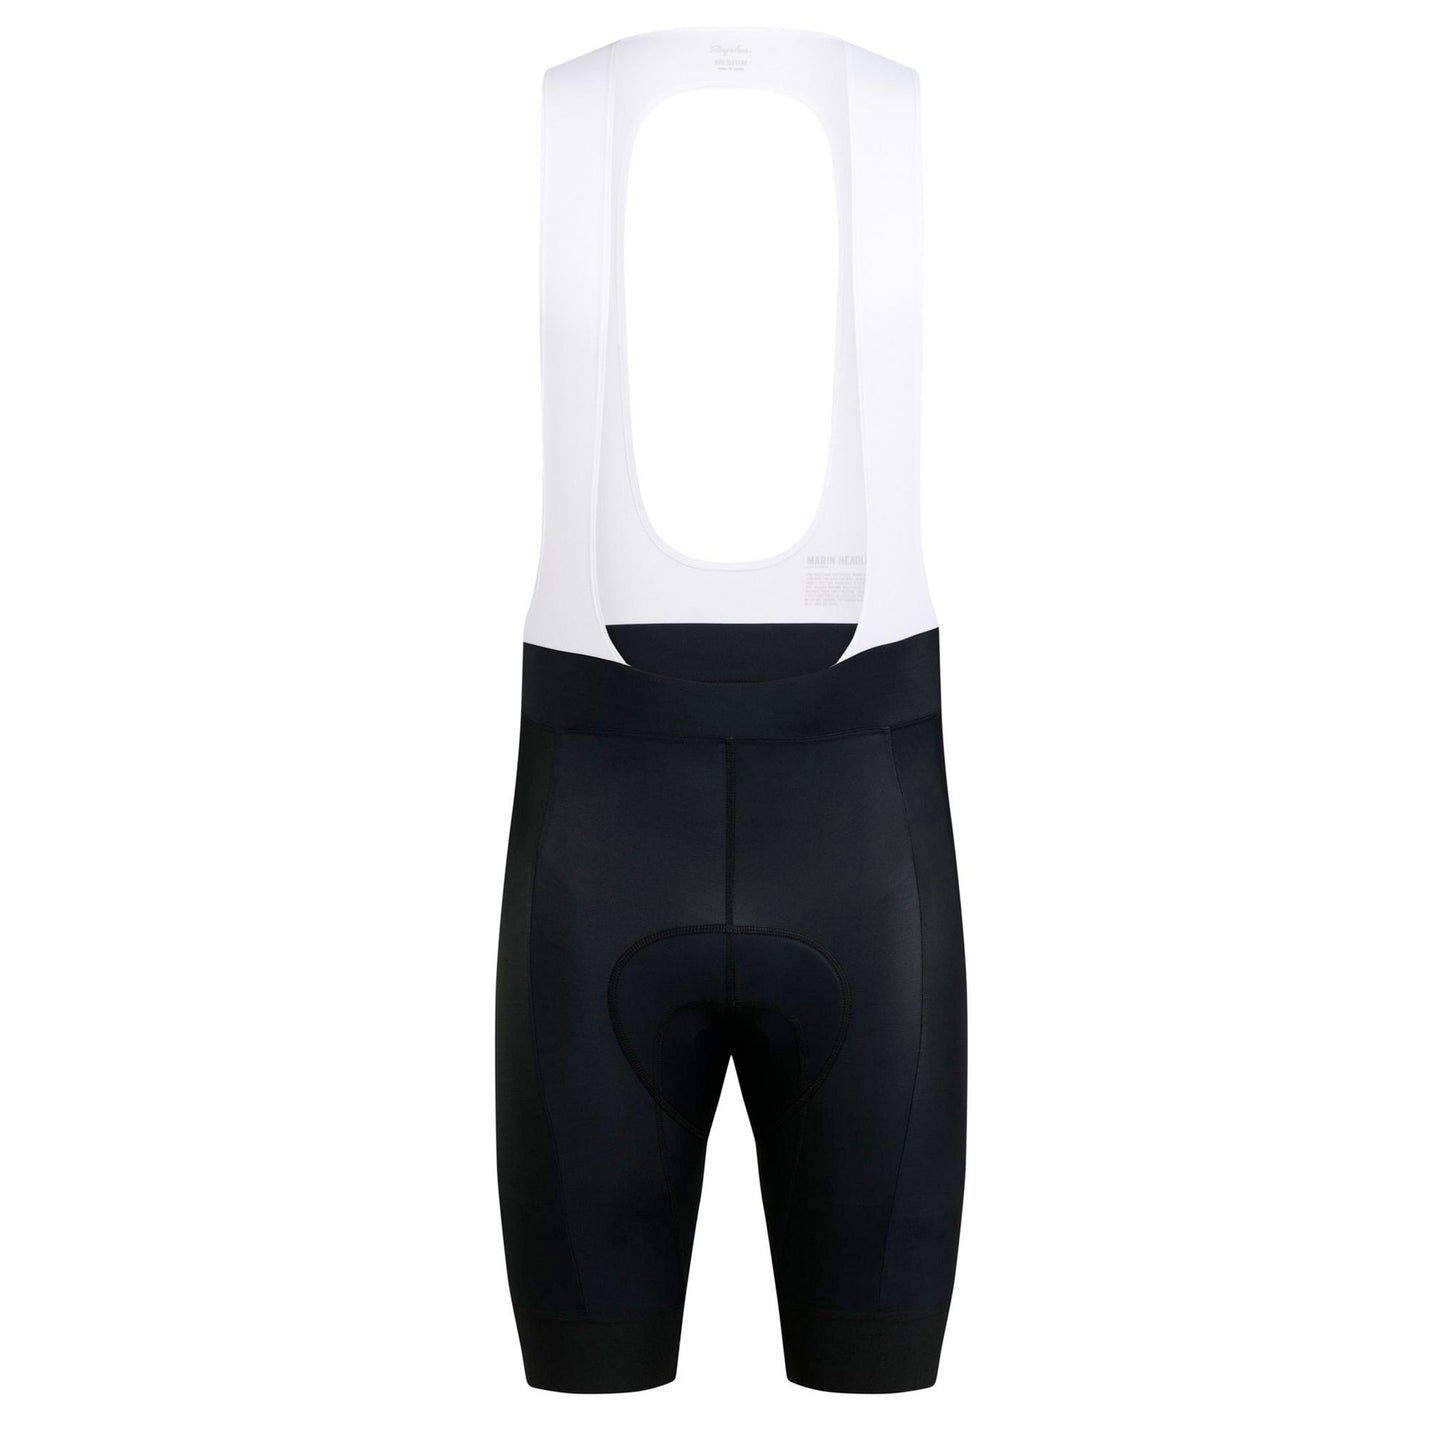 Rapha Mens Core Bib Shorts, Black/White